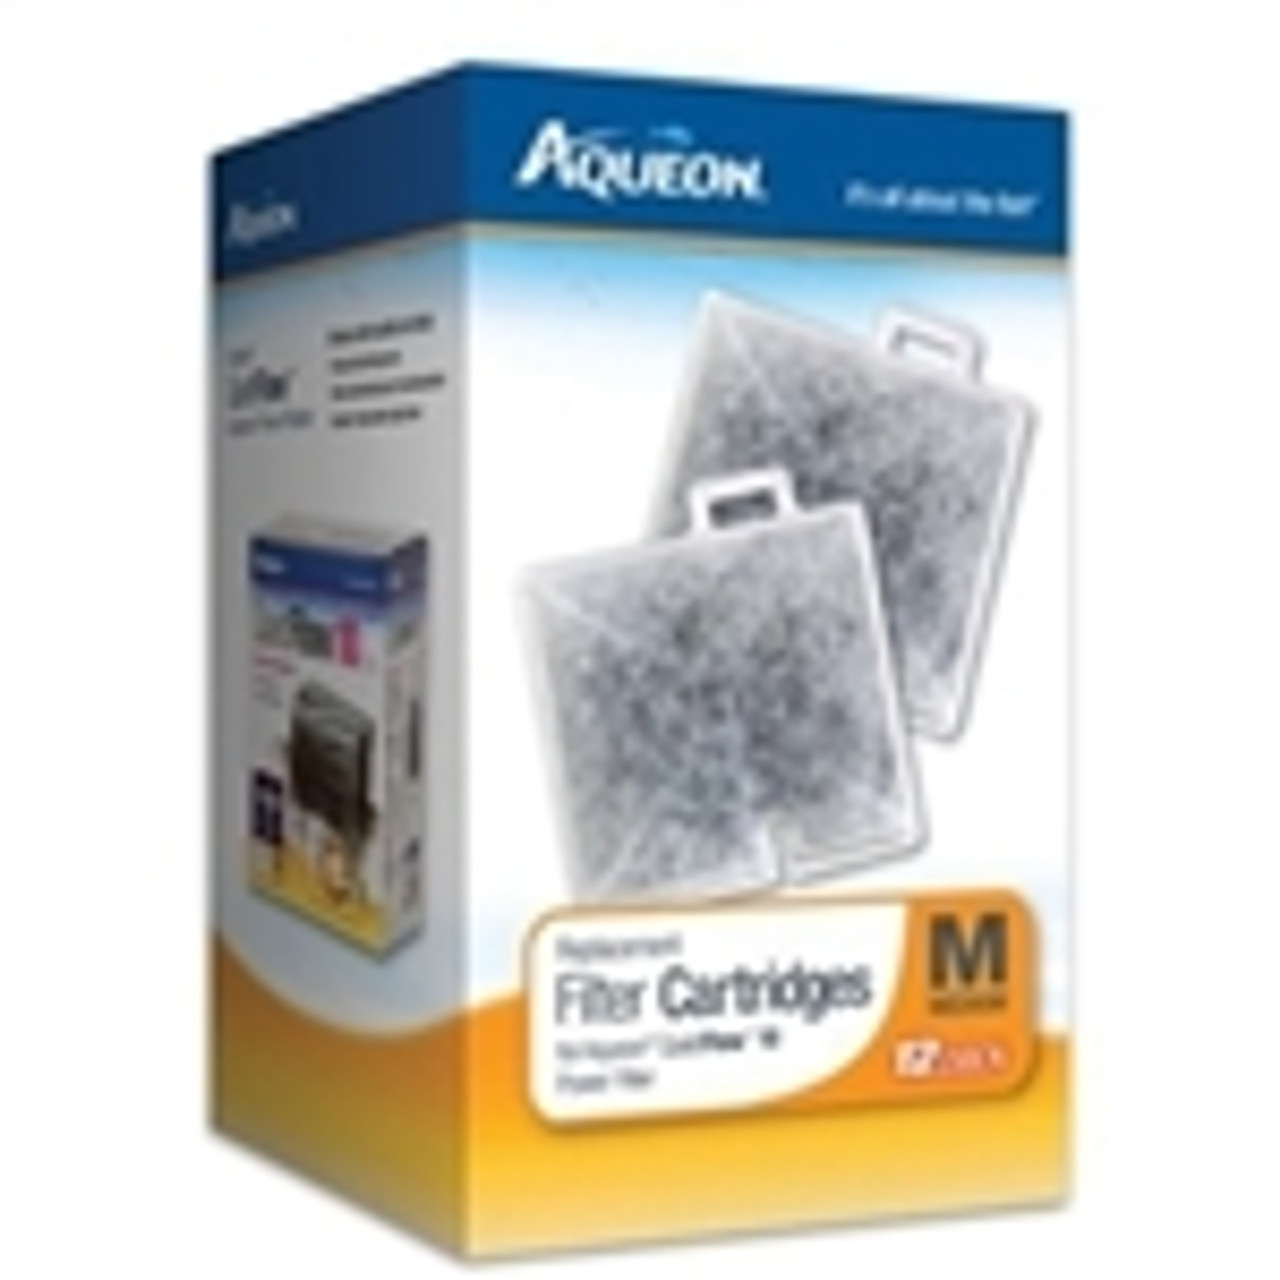 Aqueon Quietflow Filter Cartridges